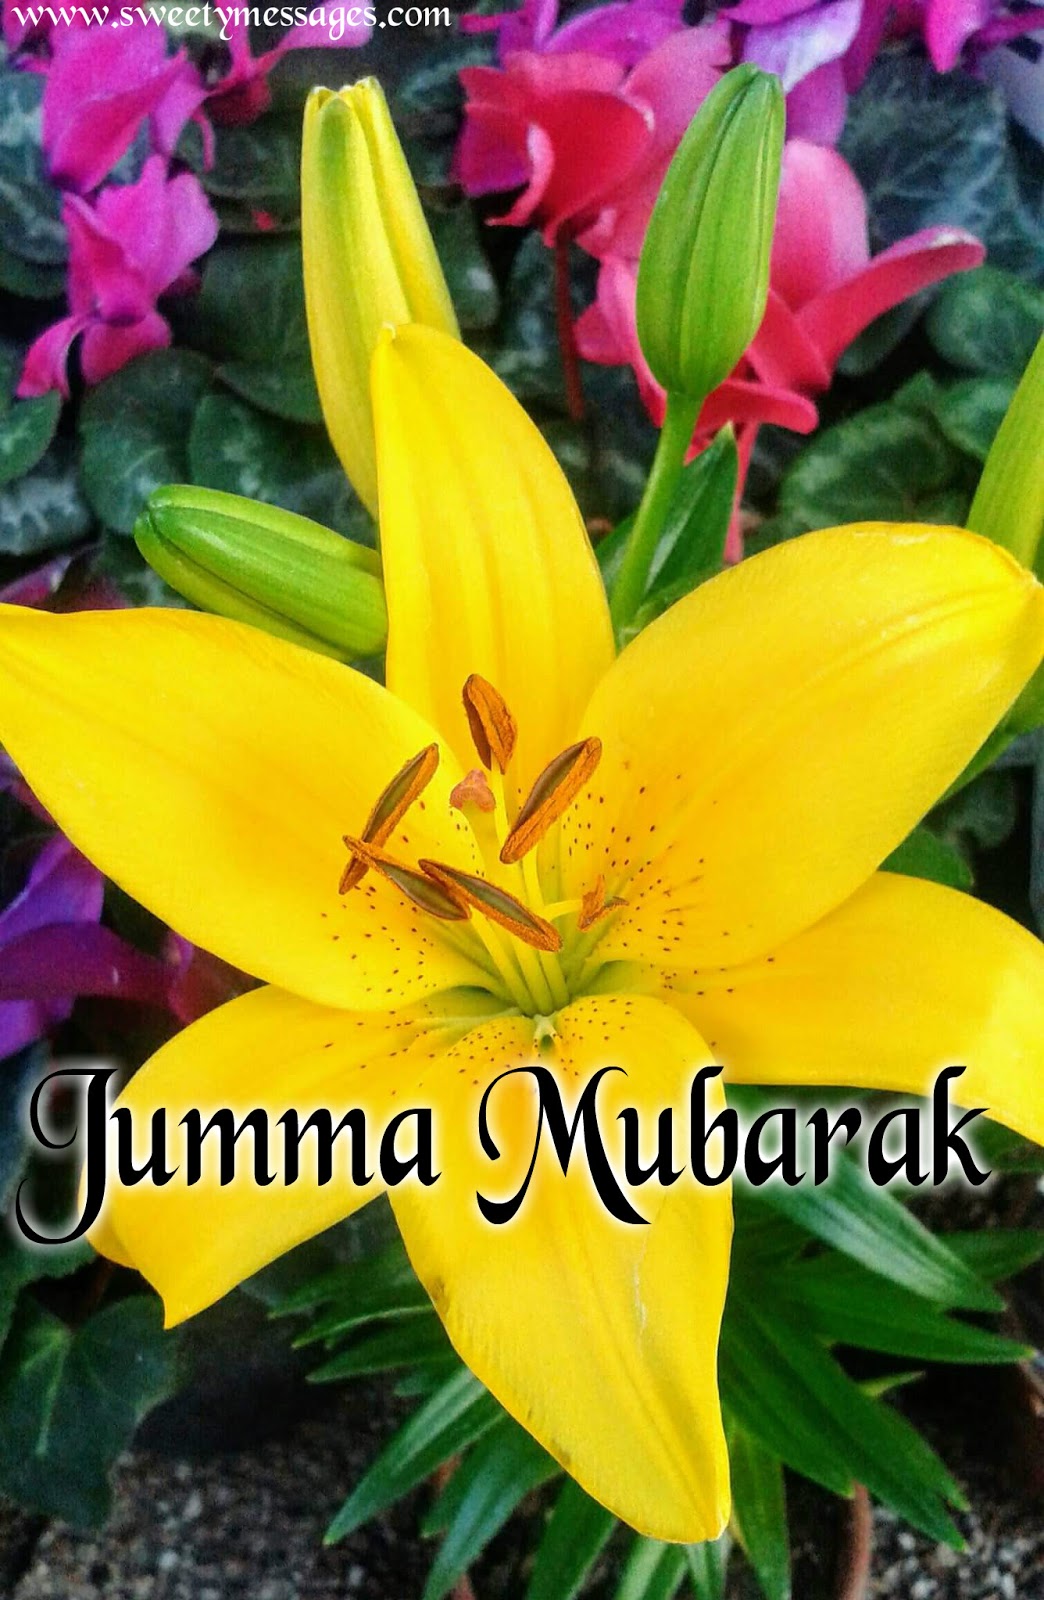 JUMMA MUBARAK IMAGES - Beautiful Messages